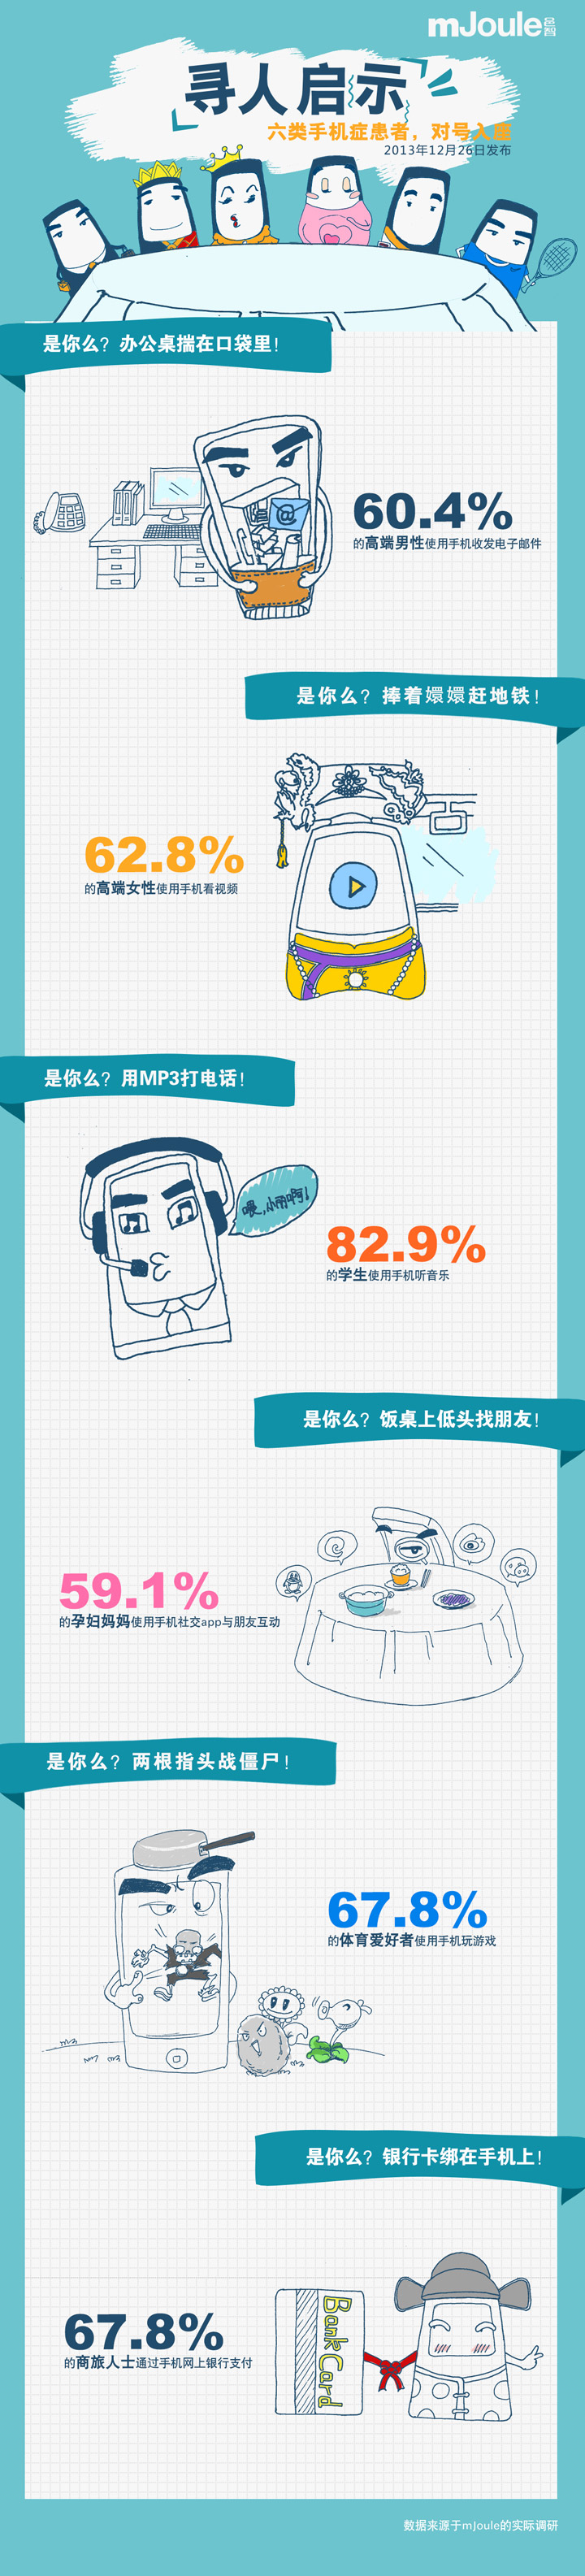 damndigital_mJoule-research-report-of-smartphone-users_2013-12_03